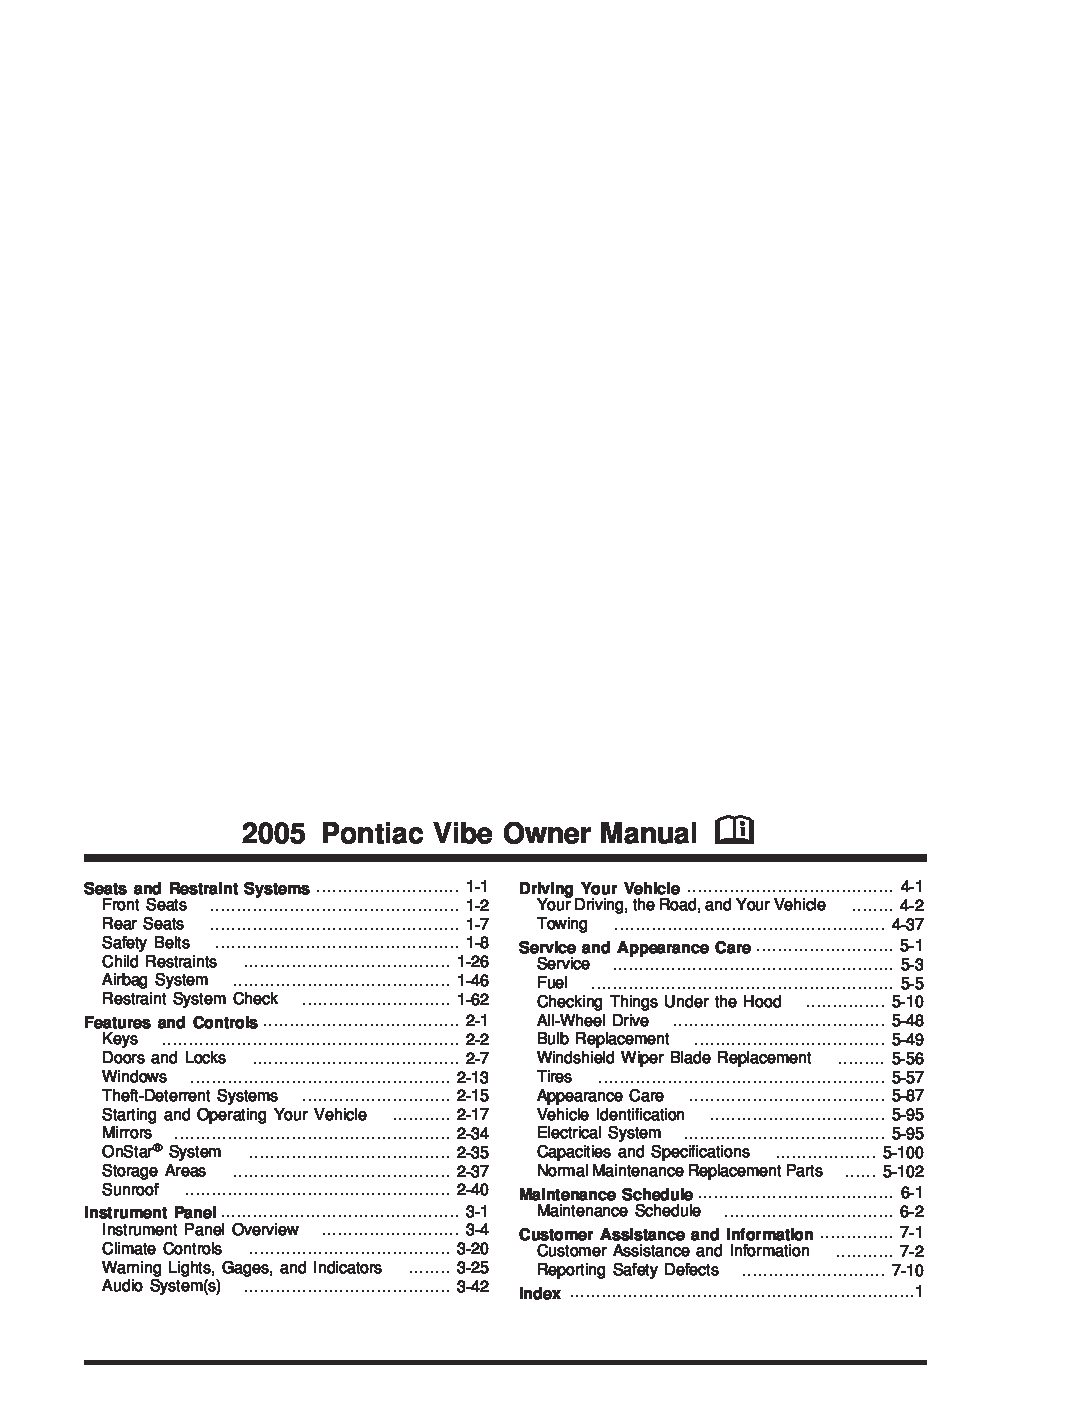 2005 pontiac vibe service manual pdf